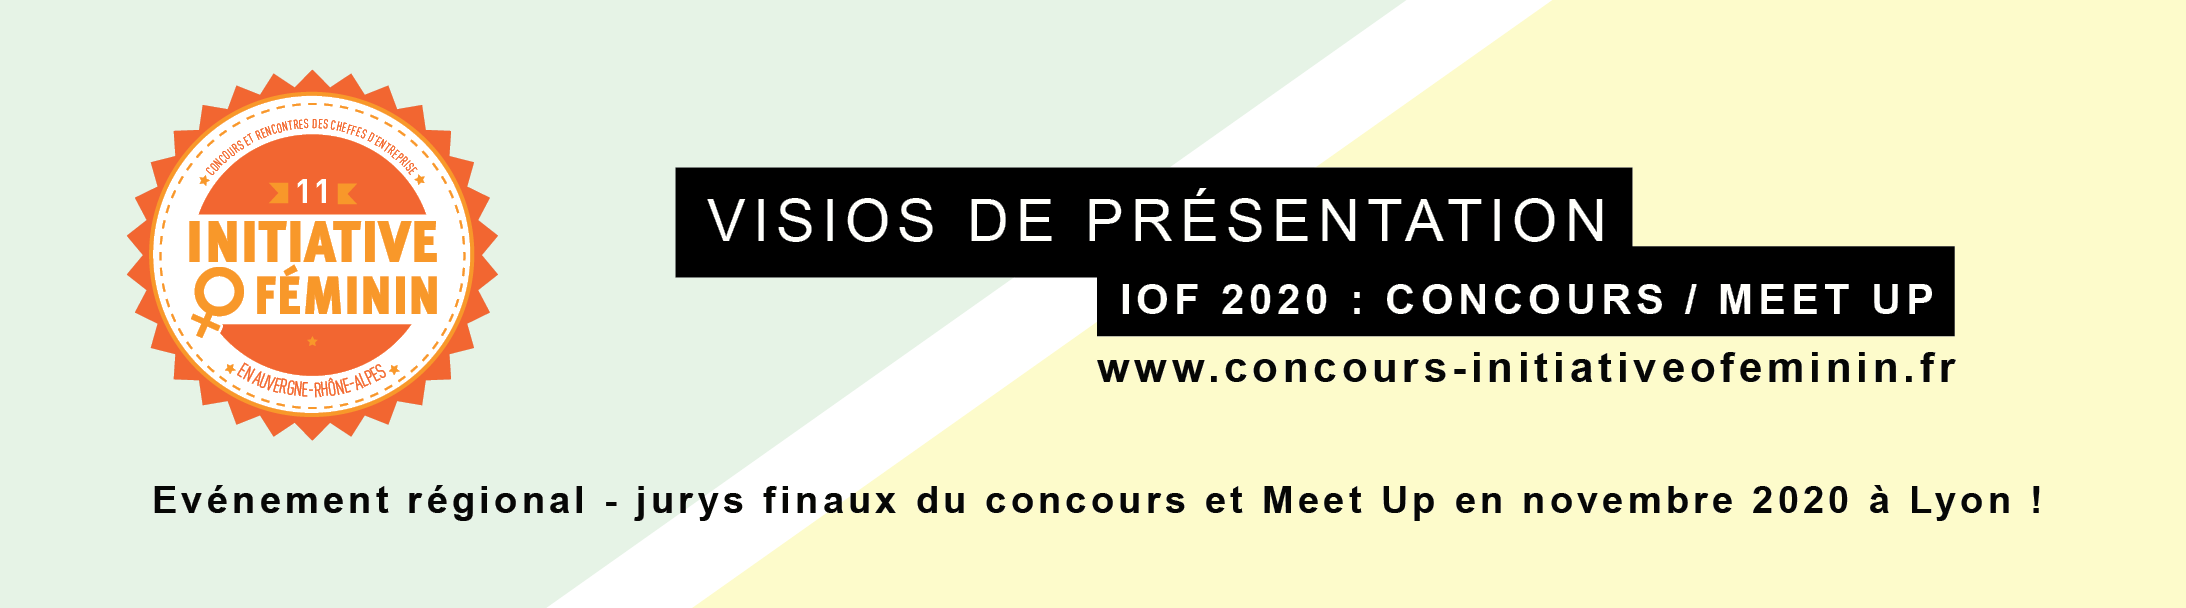 Concours initiative o féminin Auvergne rhone alpes 2020